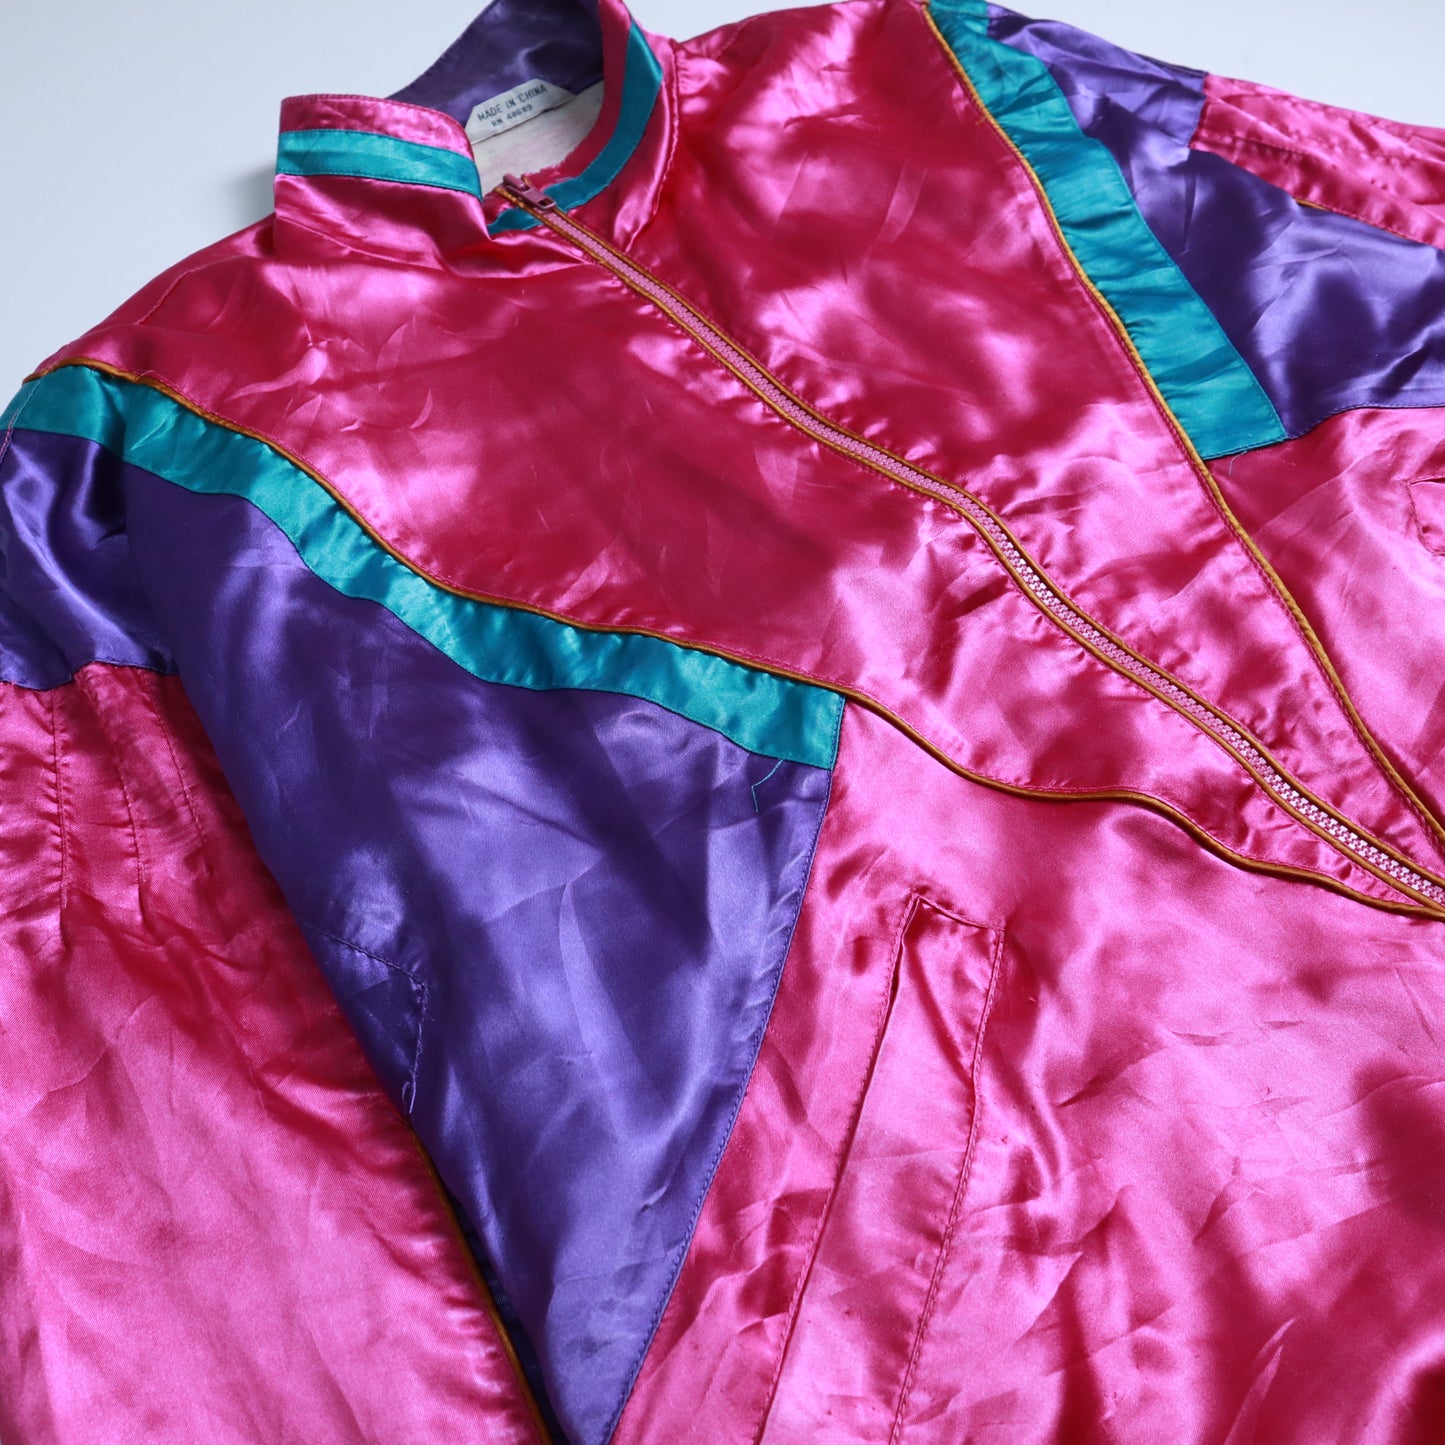 90's Crazy Nylon jacket 撞色幾何圖騰防風外套 古著外套